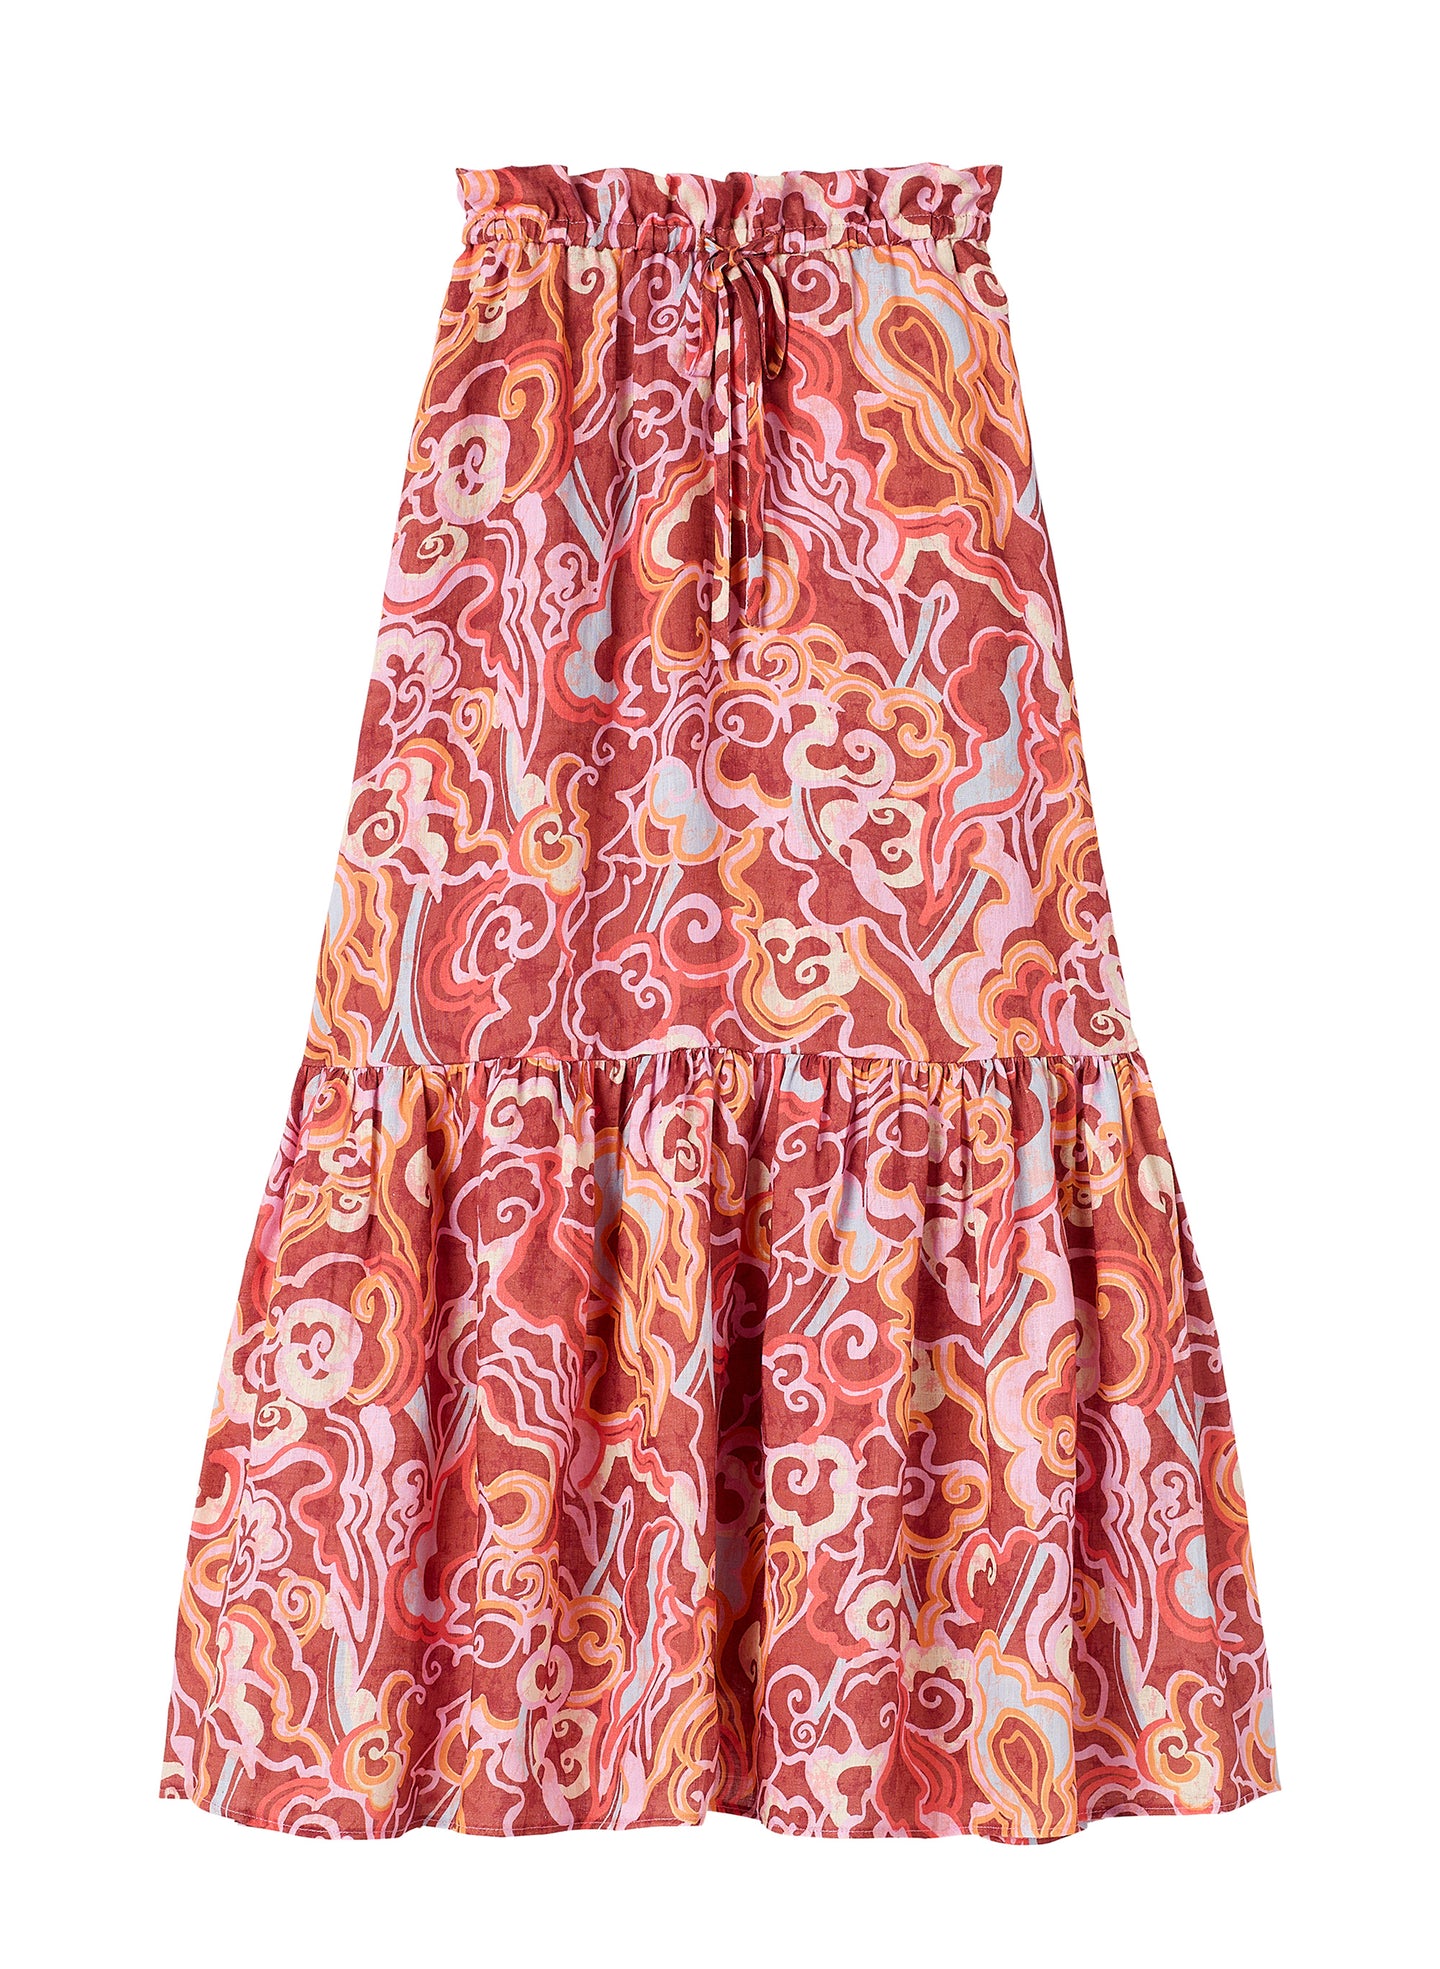 flatlay of abstract print midi skirt